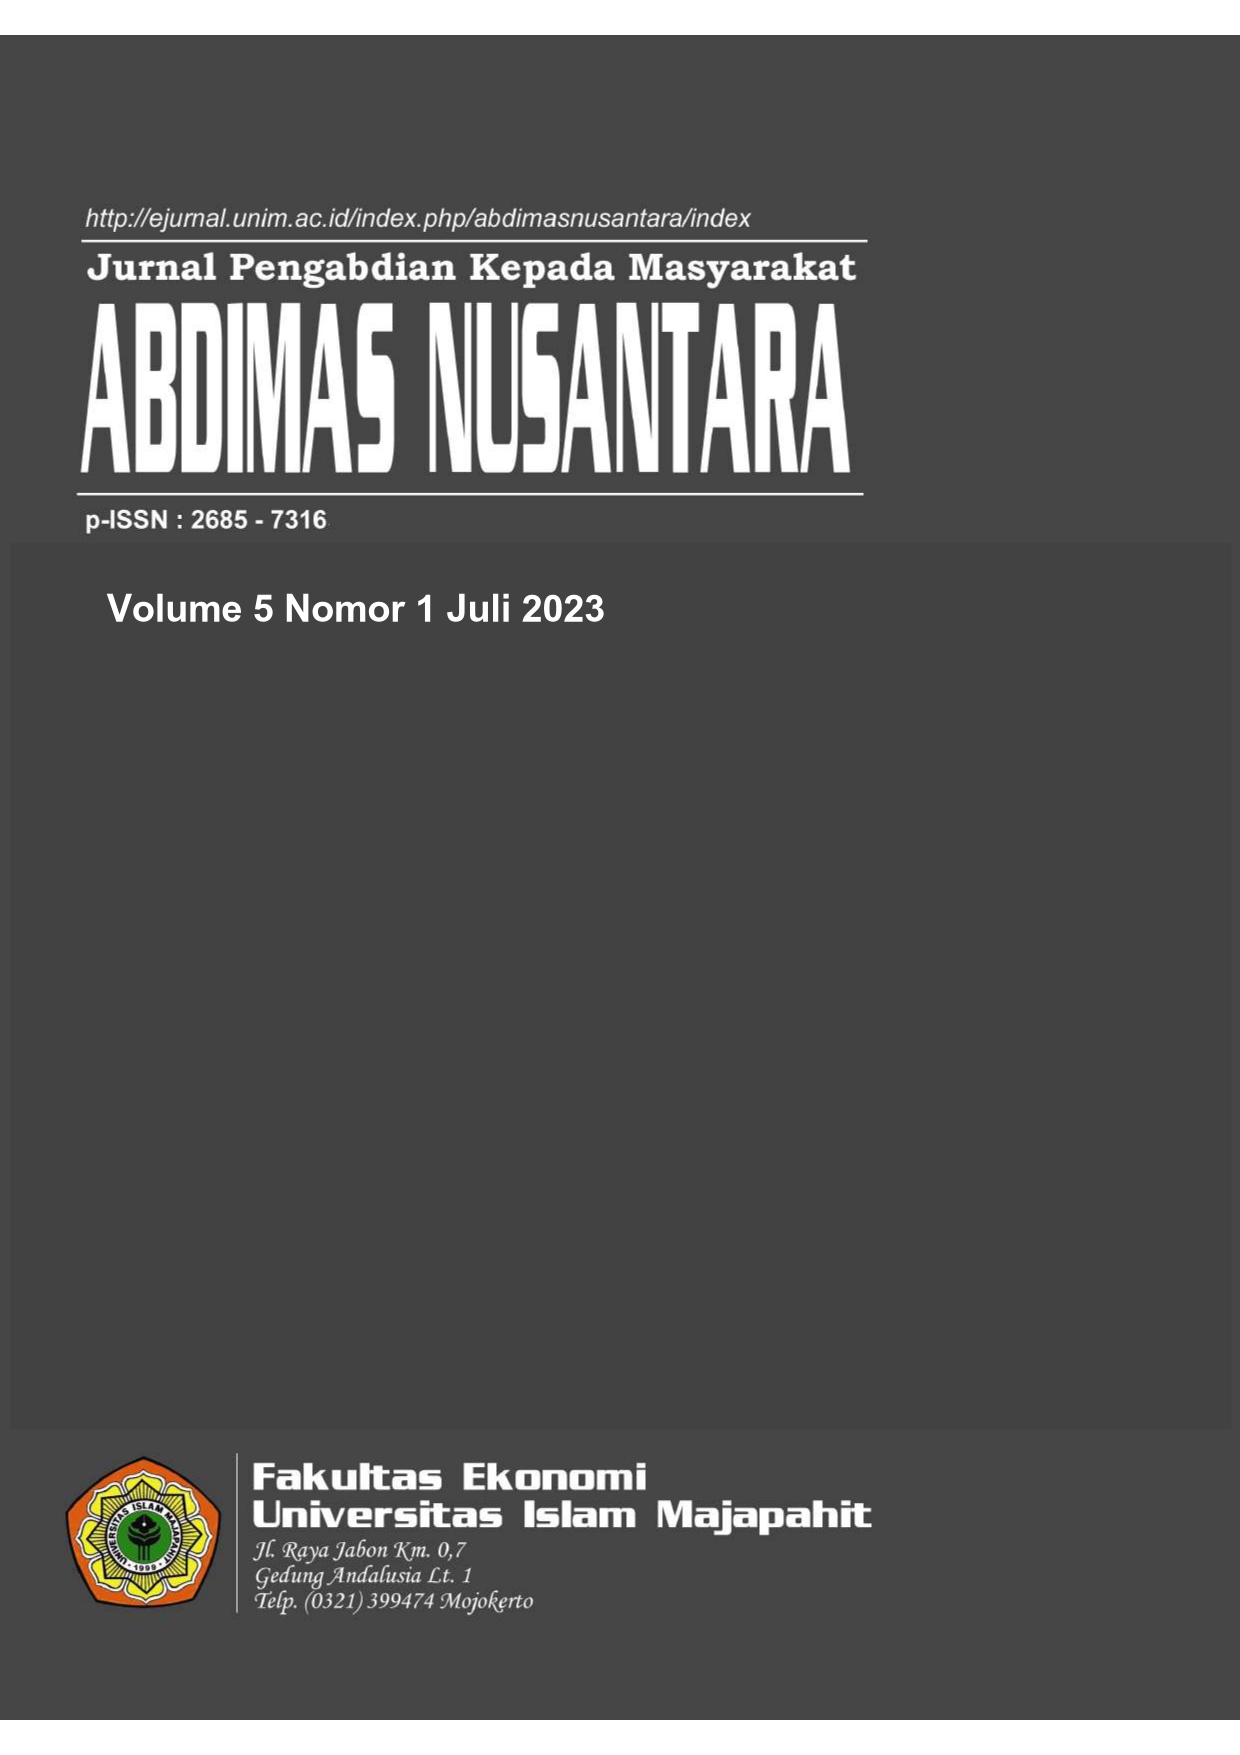 					View Vol. 5 No. 1 (2023): ABDIMAS NUSANTARA (Juli)
				